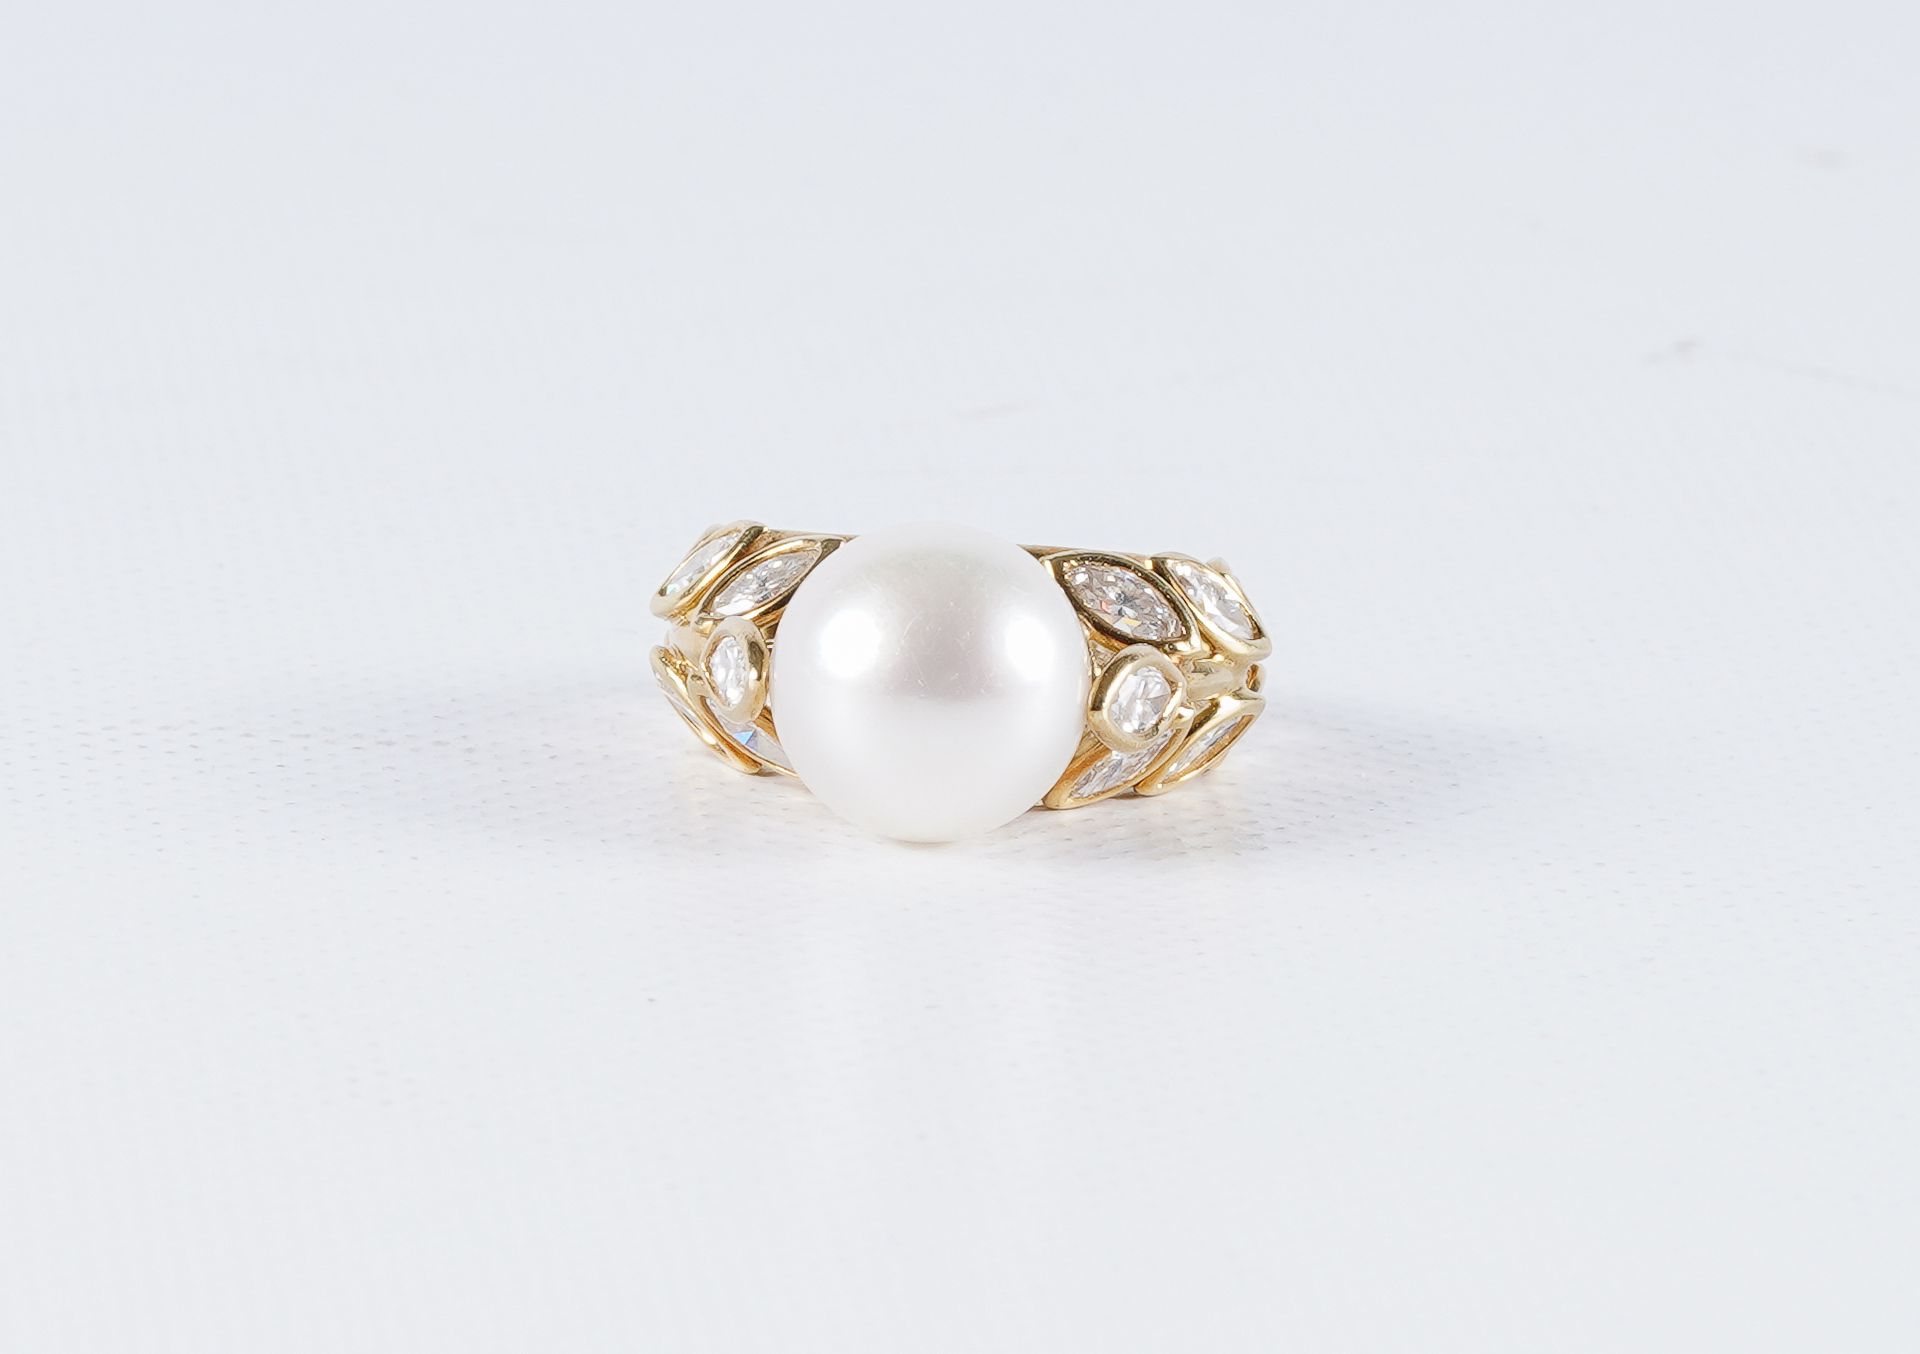 Bague en or, perle et diamants 18K金戒指，镶嵌12颗钻石和一颗珍珠，无印记。